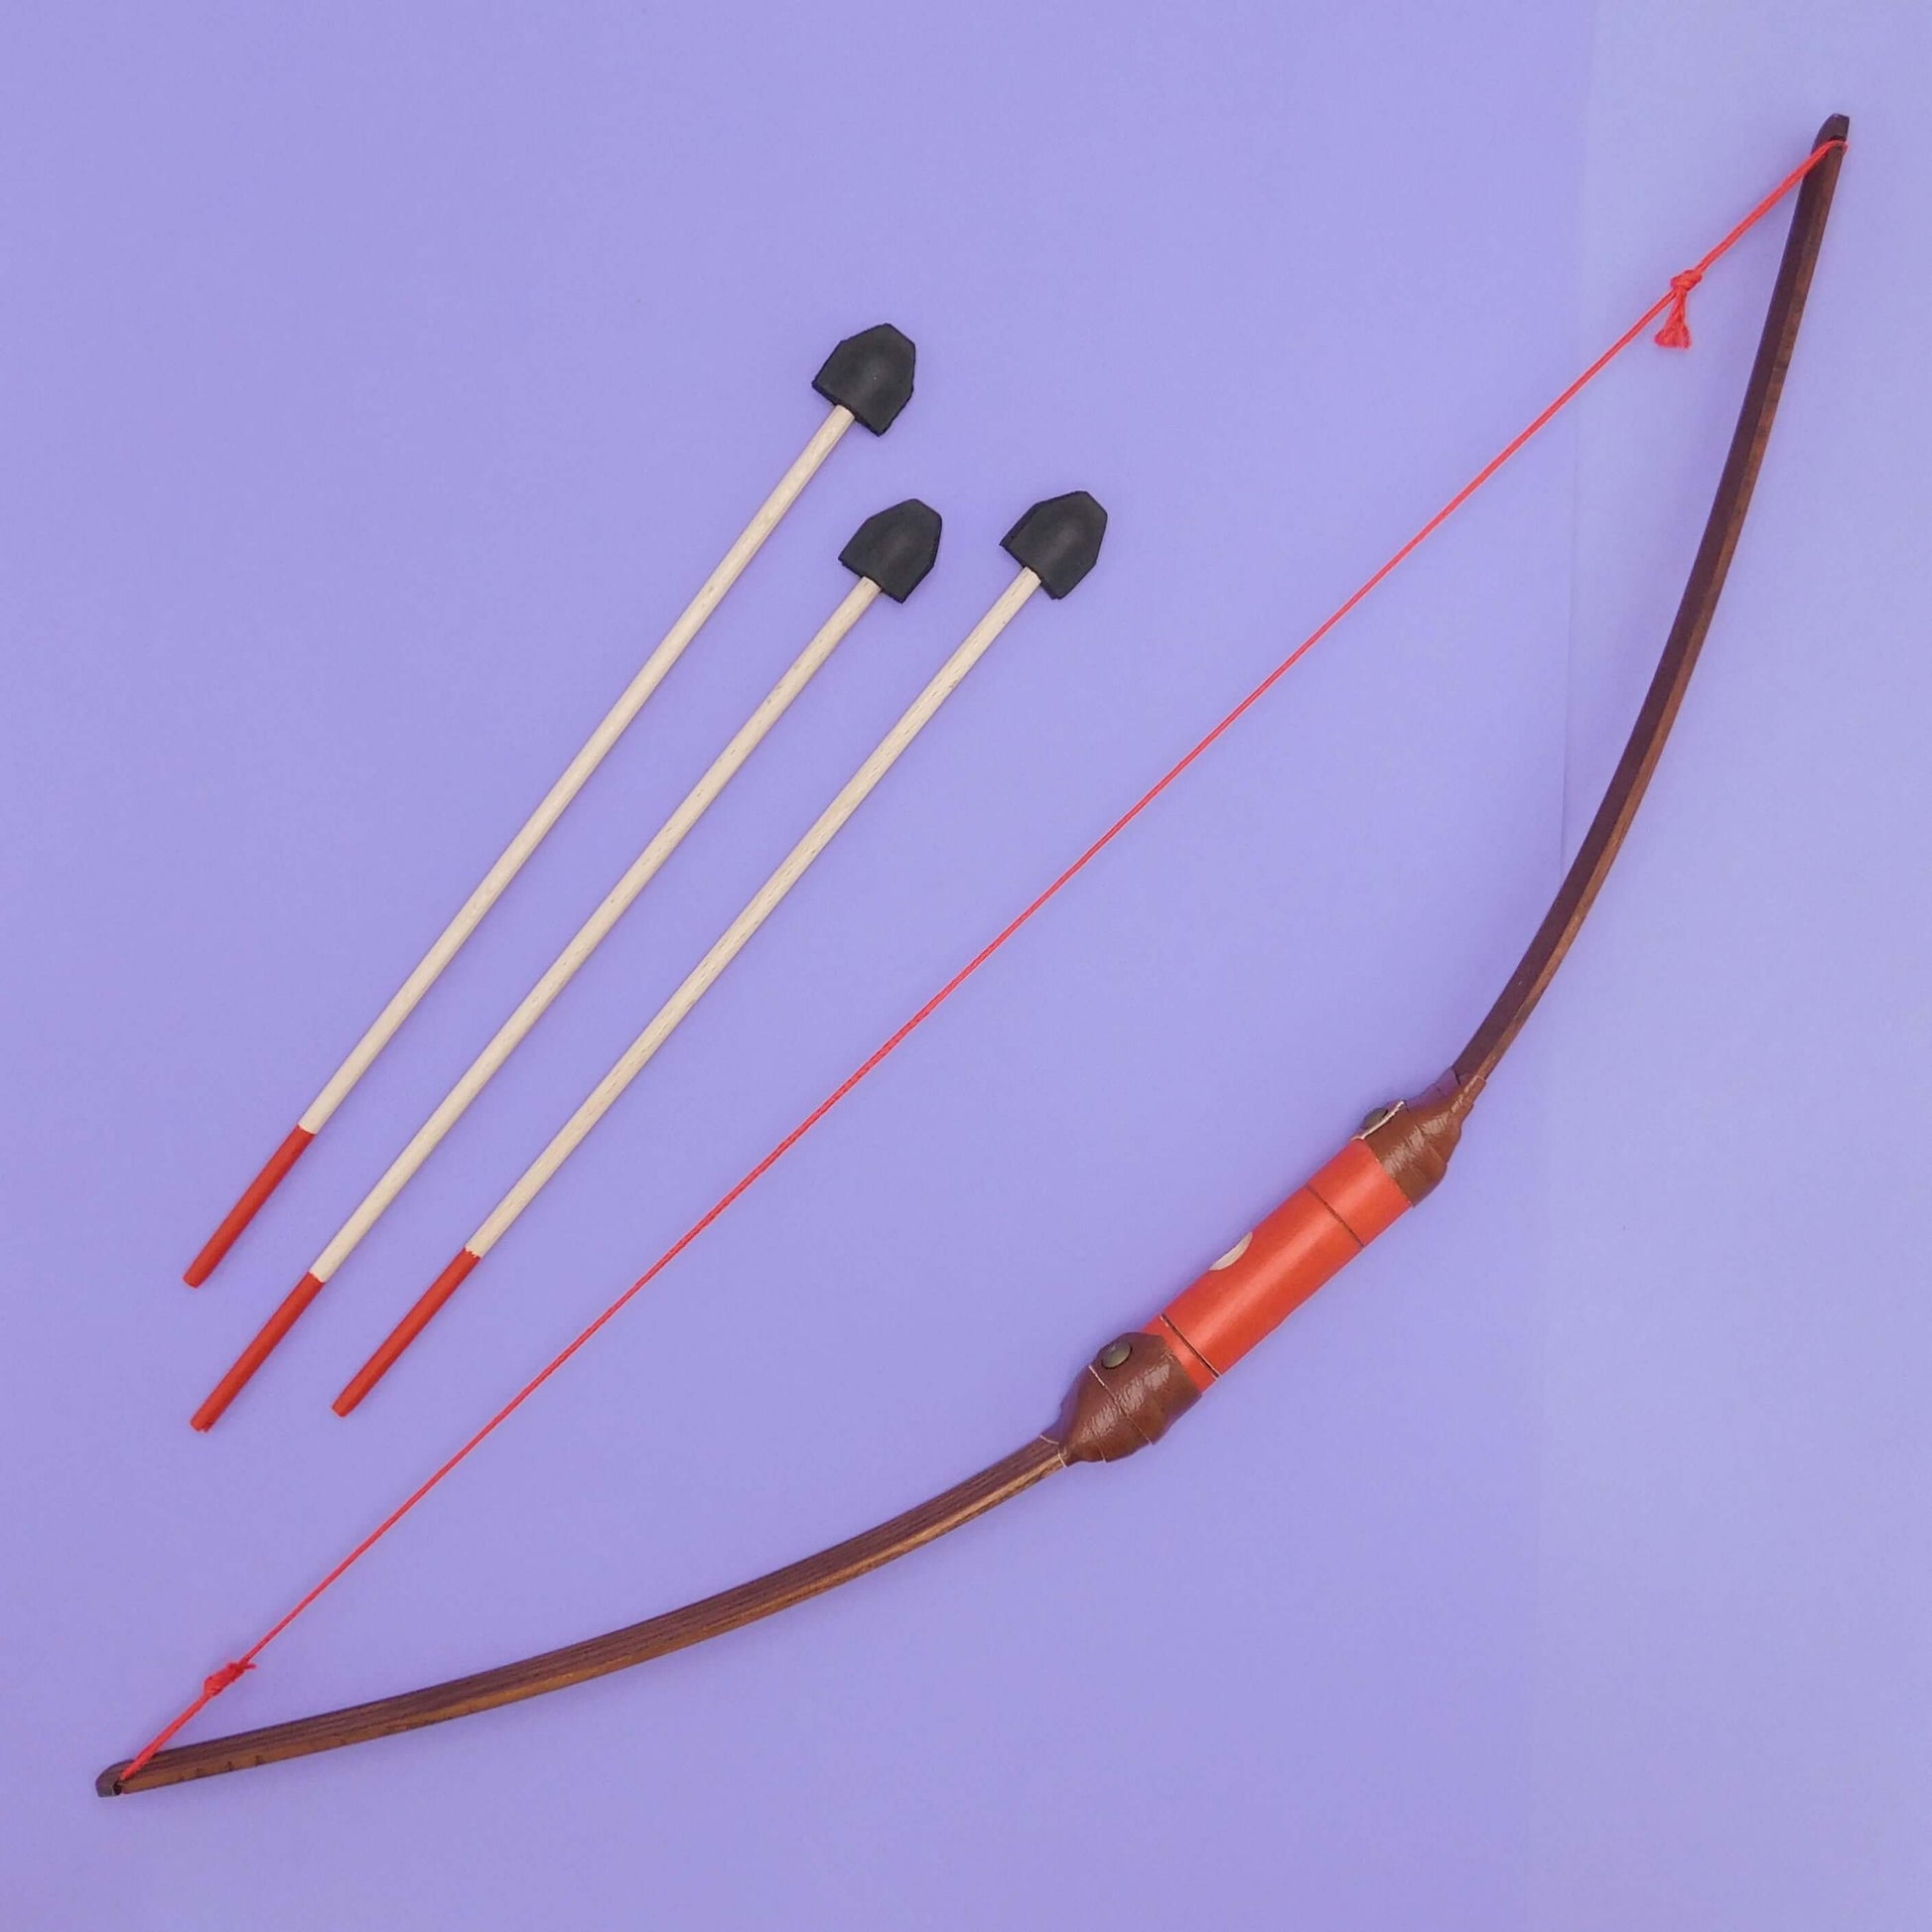 Arco de madera de juguete con flechas rojo